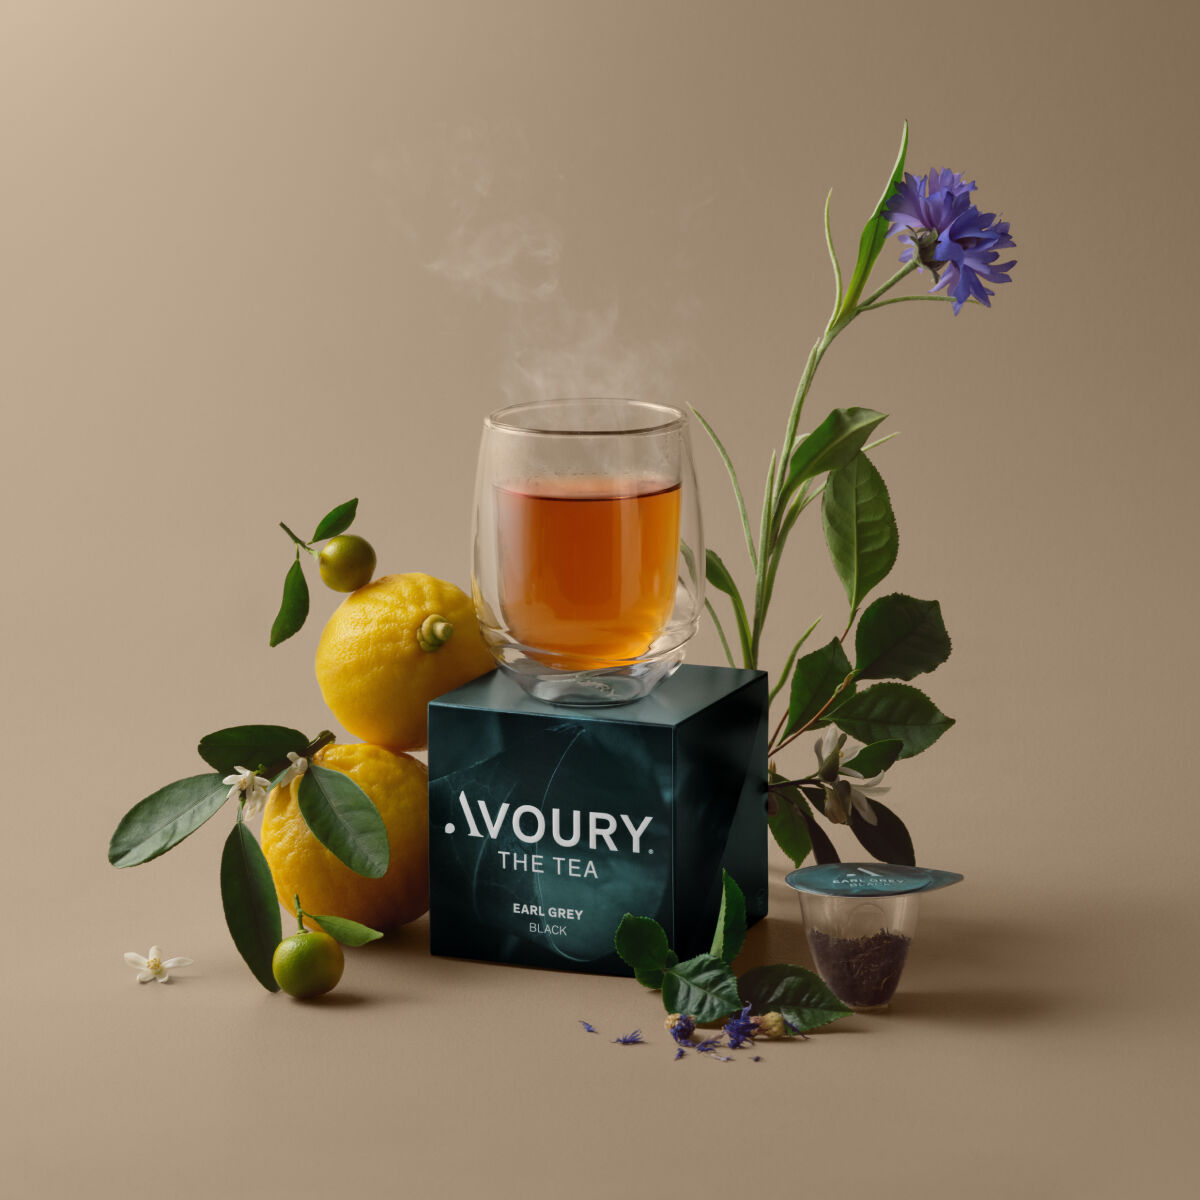 Avoury double-walled tea glass on a Avoury tea box